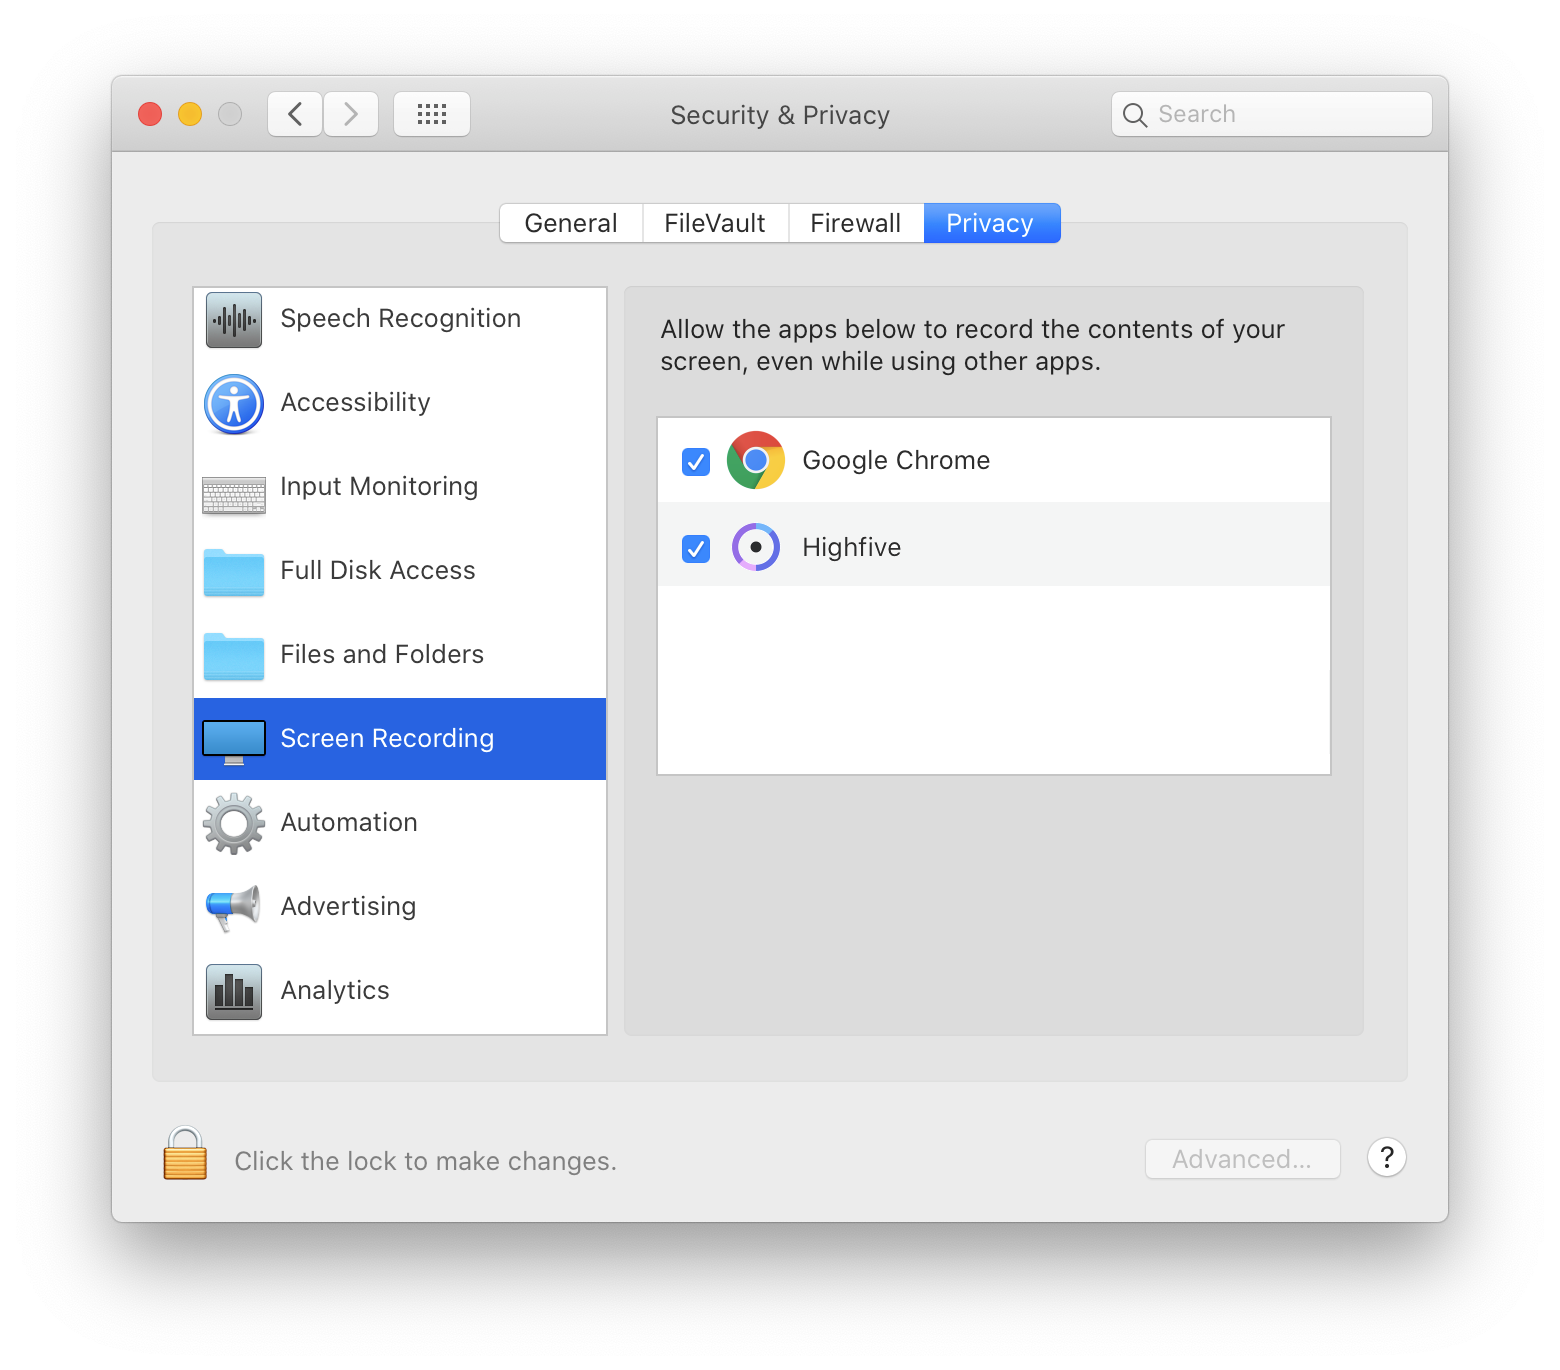 update google chrome for mac os x